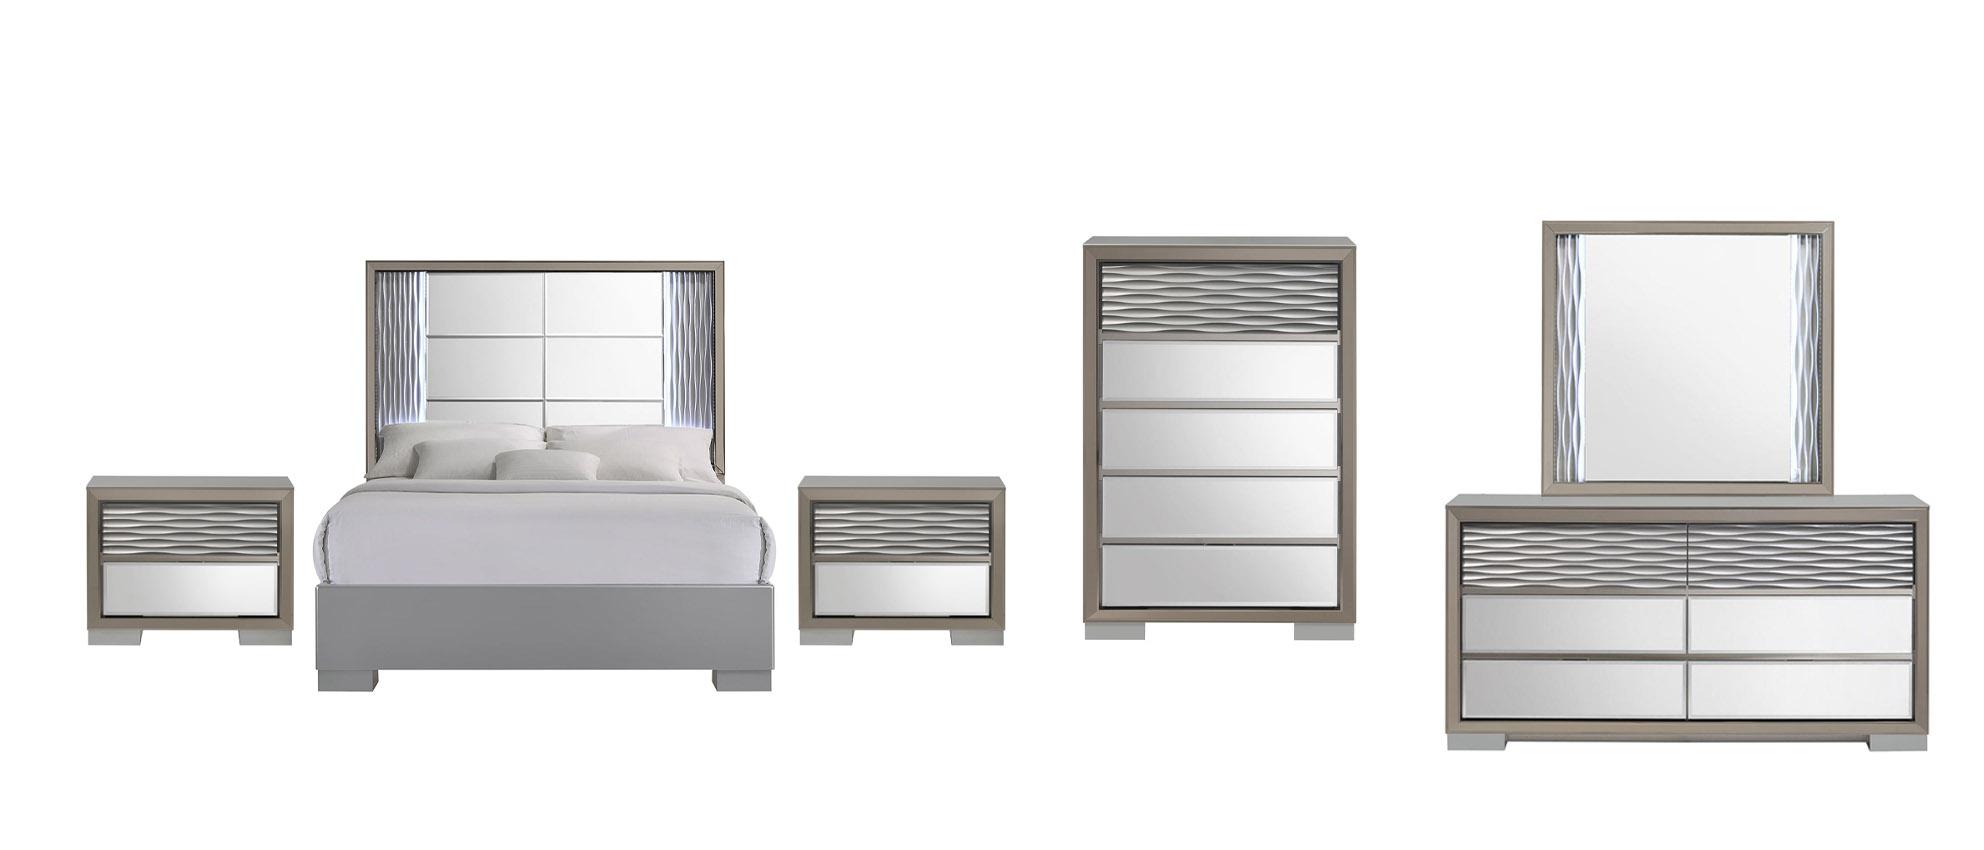 Contemporary Platform Bedroom Set SKYLINE SKYLINE-SILVER-KB-Set-6 in Mirrored, Silver 